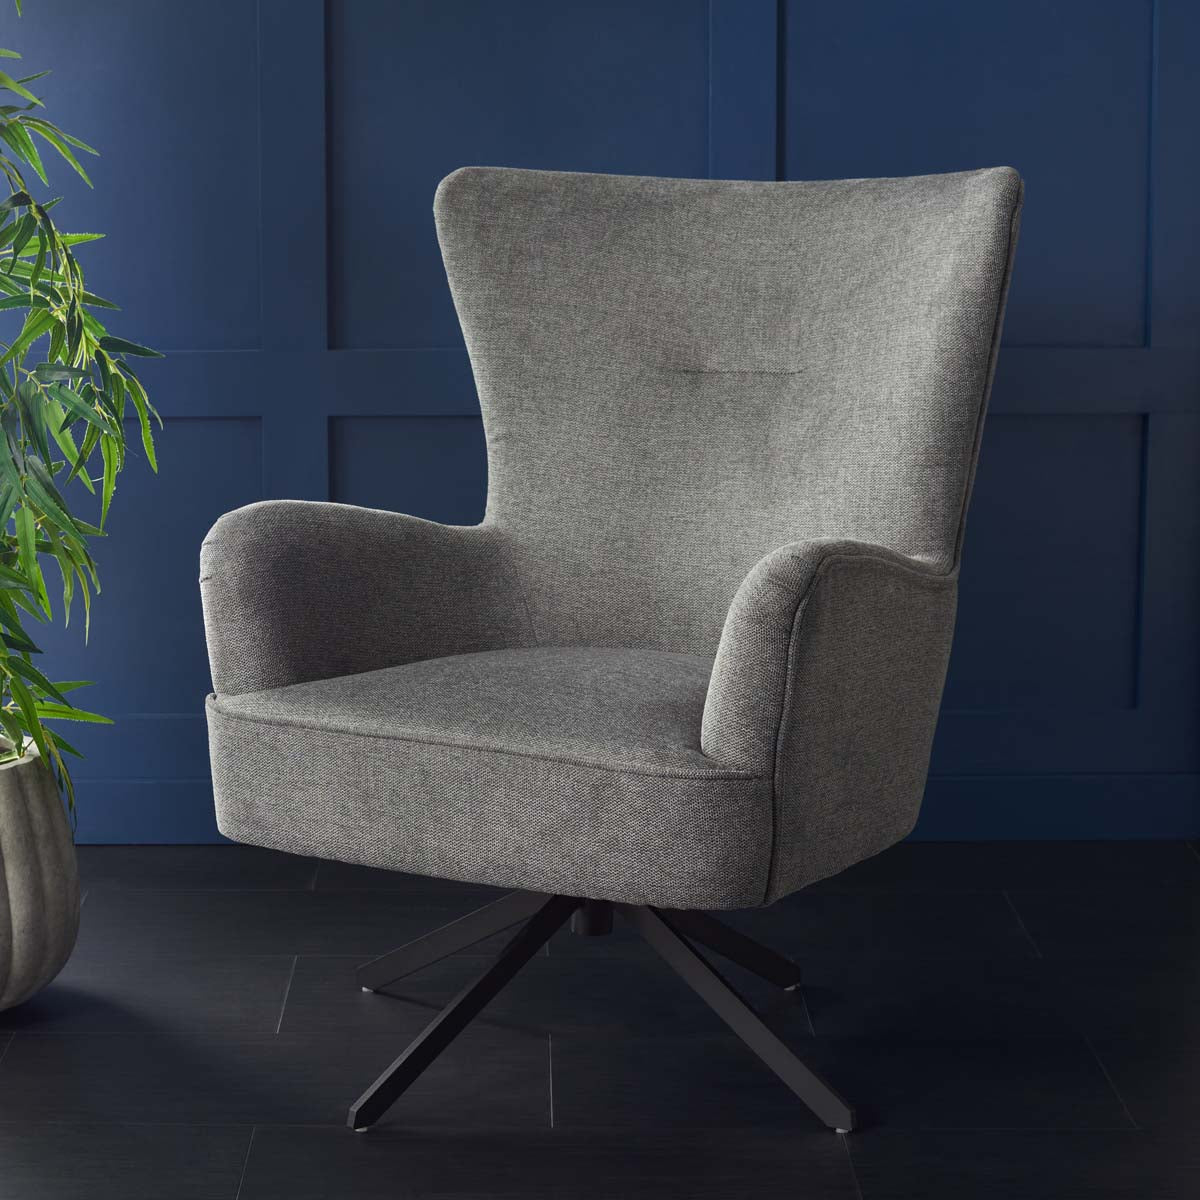 Safavieh Geonna Upholstered Arm Chair , ACH5107 - Medium Grey / Black